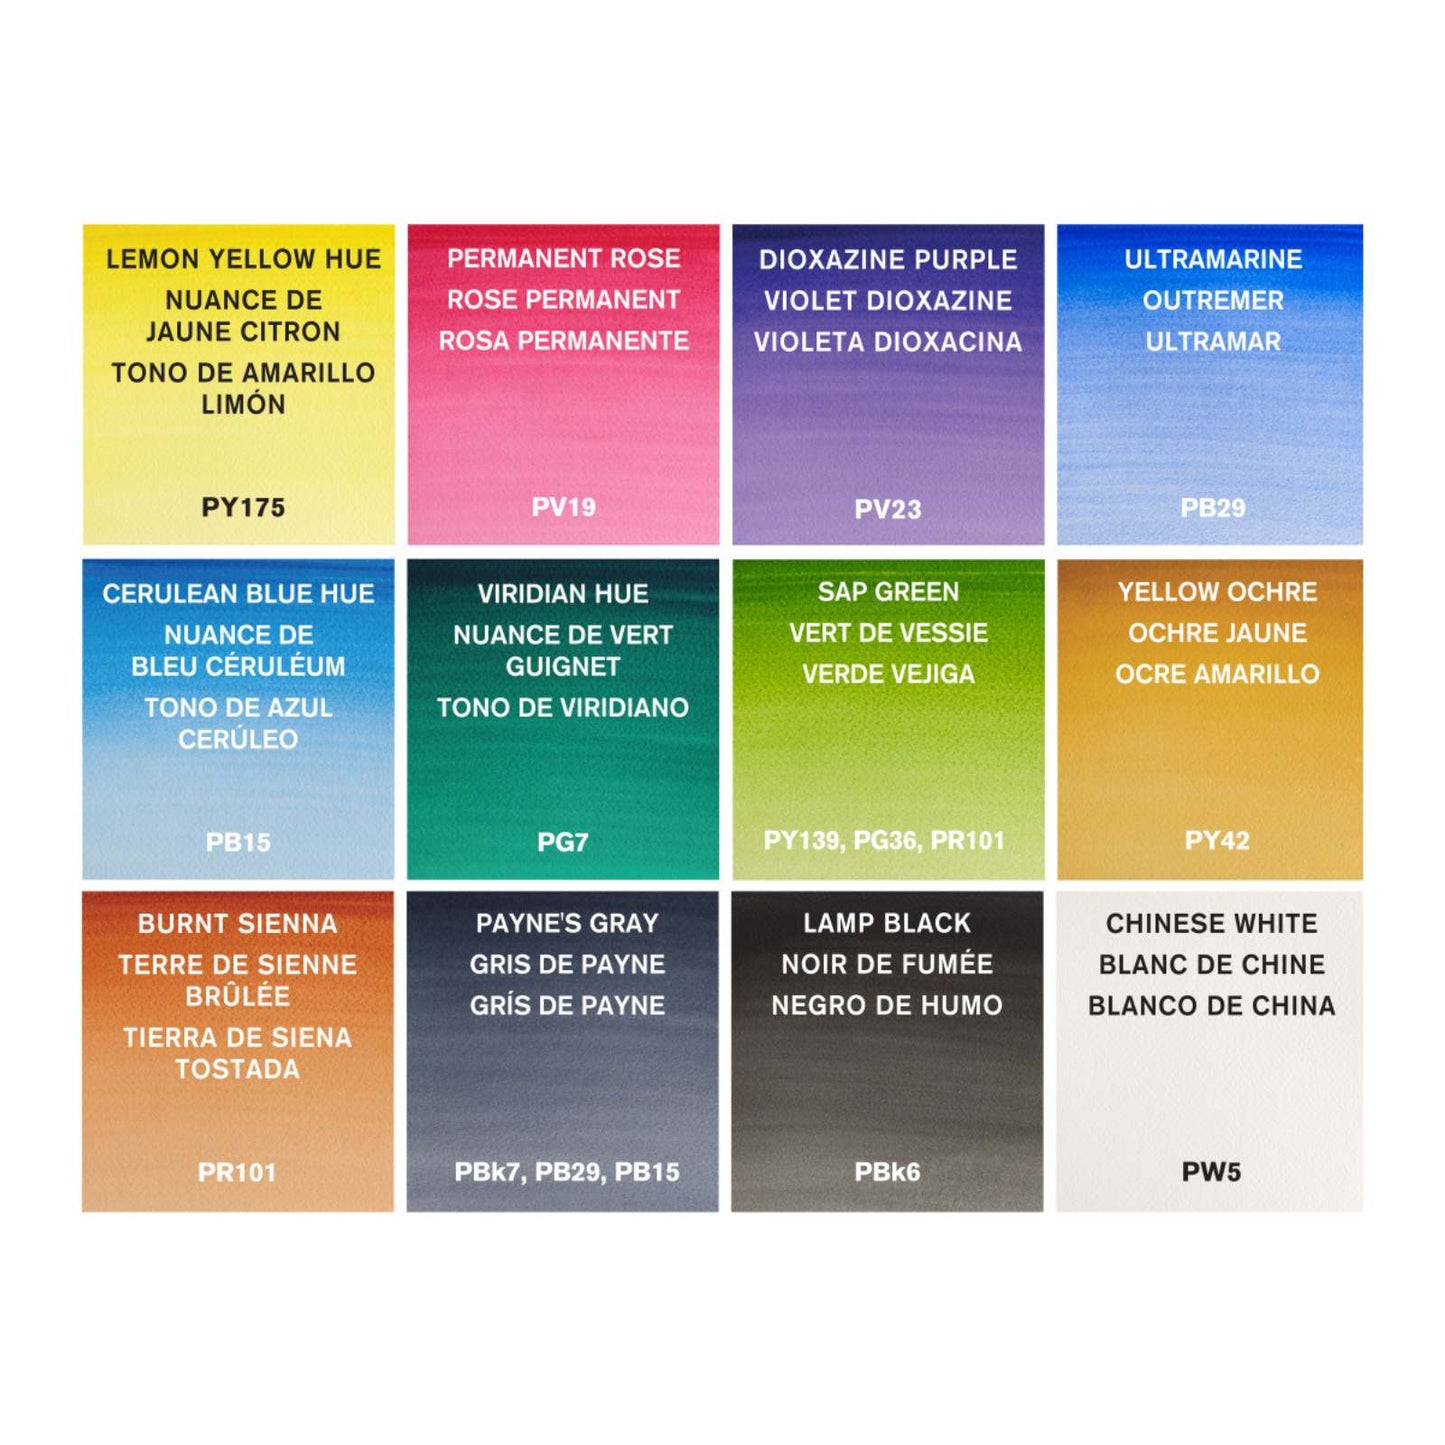 Winsor & Newton Watercolour Half-Pan Set Winsor & Newton - Cotman Watercolour - Water Brush Pocket Set - 12 Colours - Item #0390658